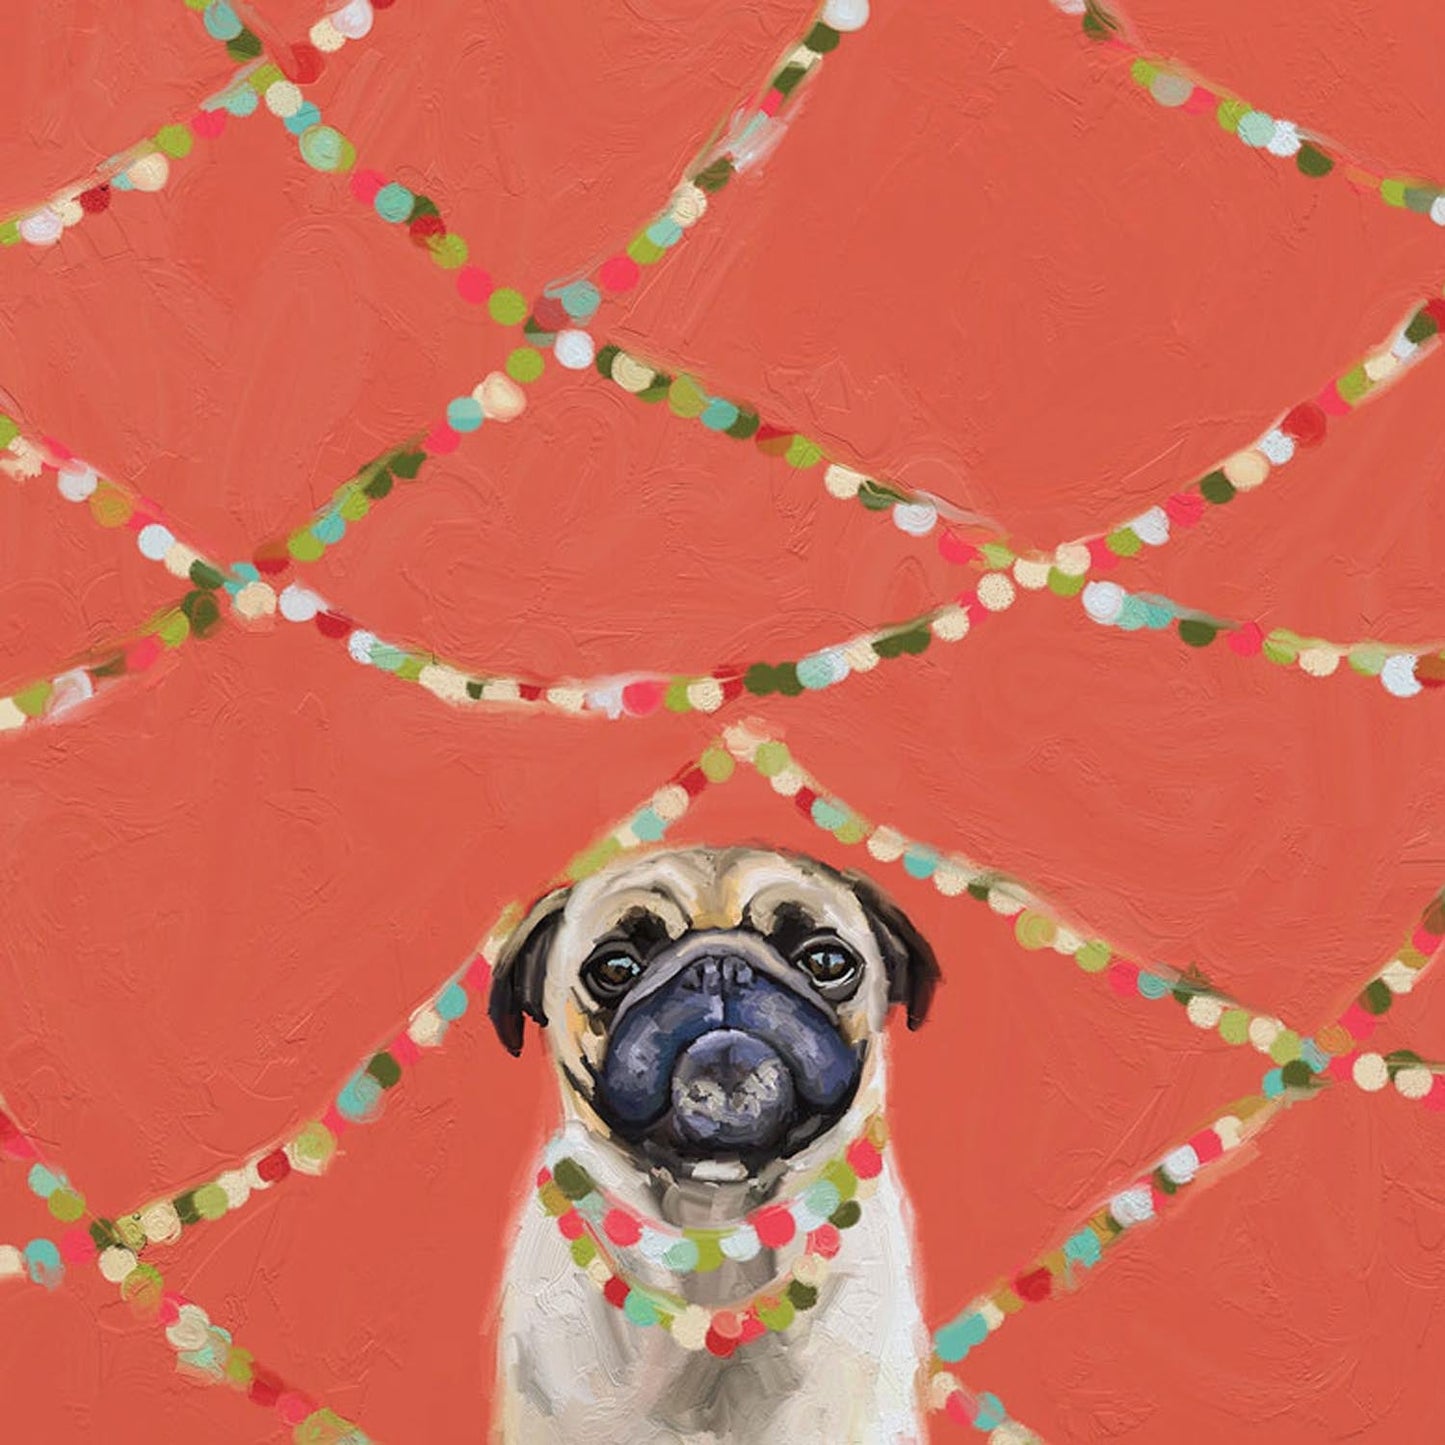 Best Friend - Festive Party Pug Canvas Wall Art